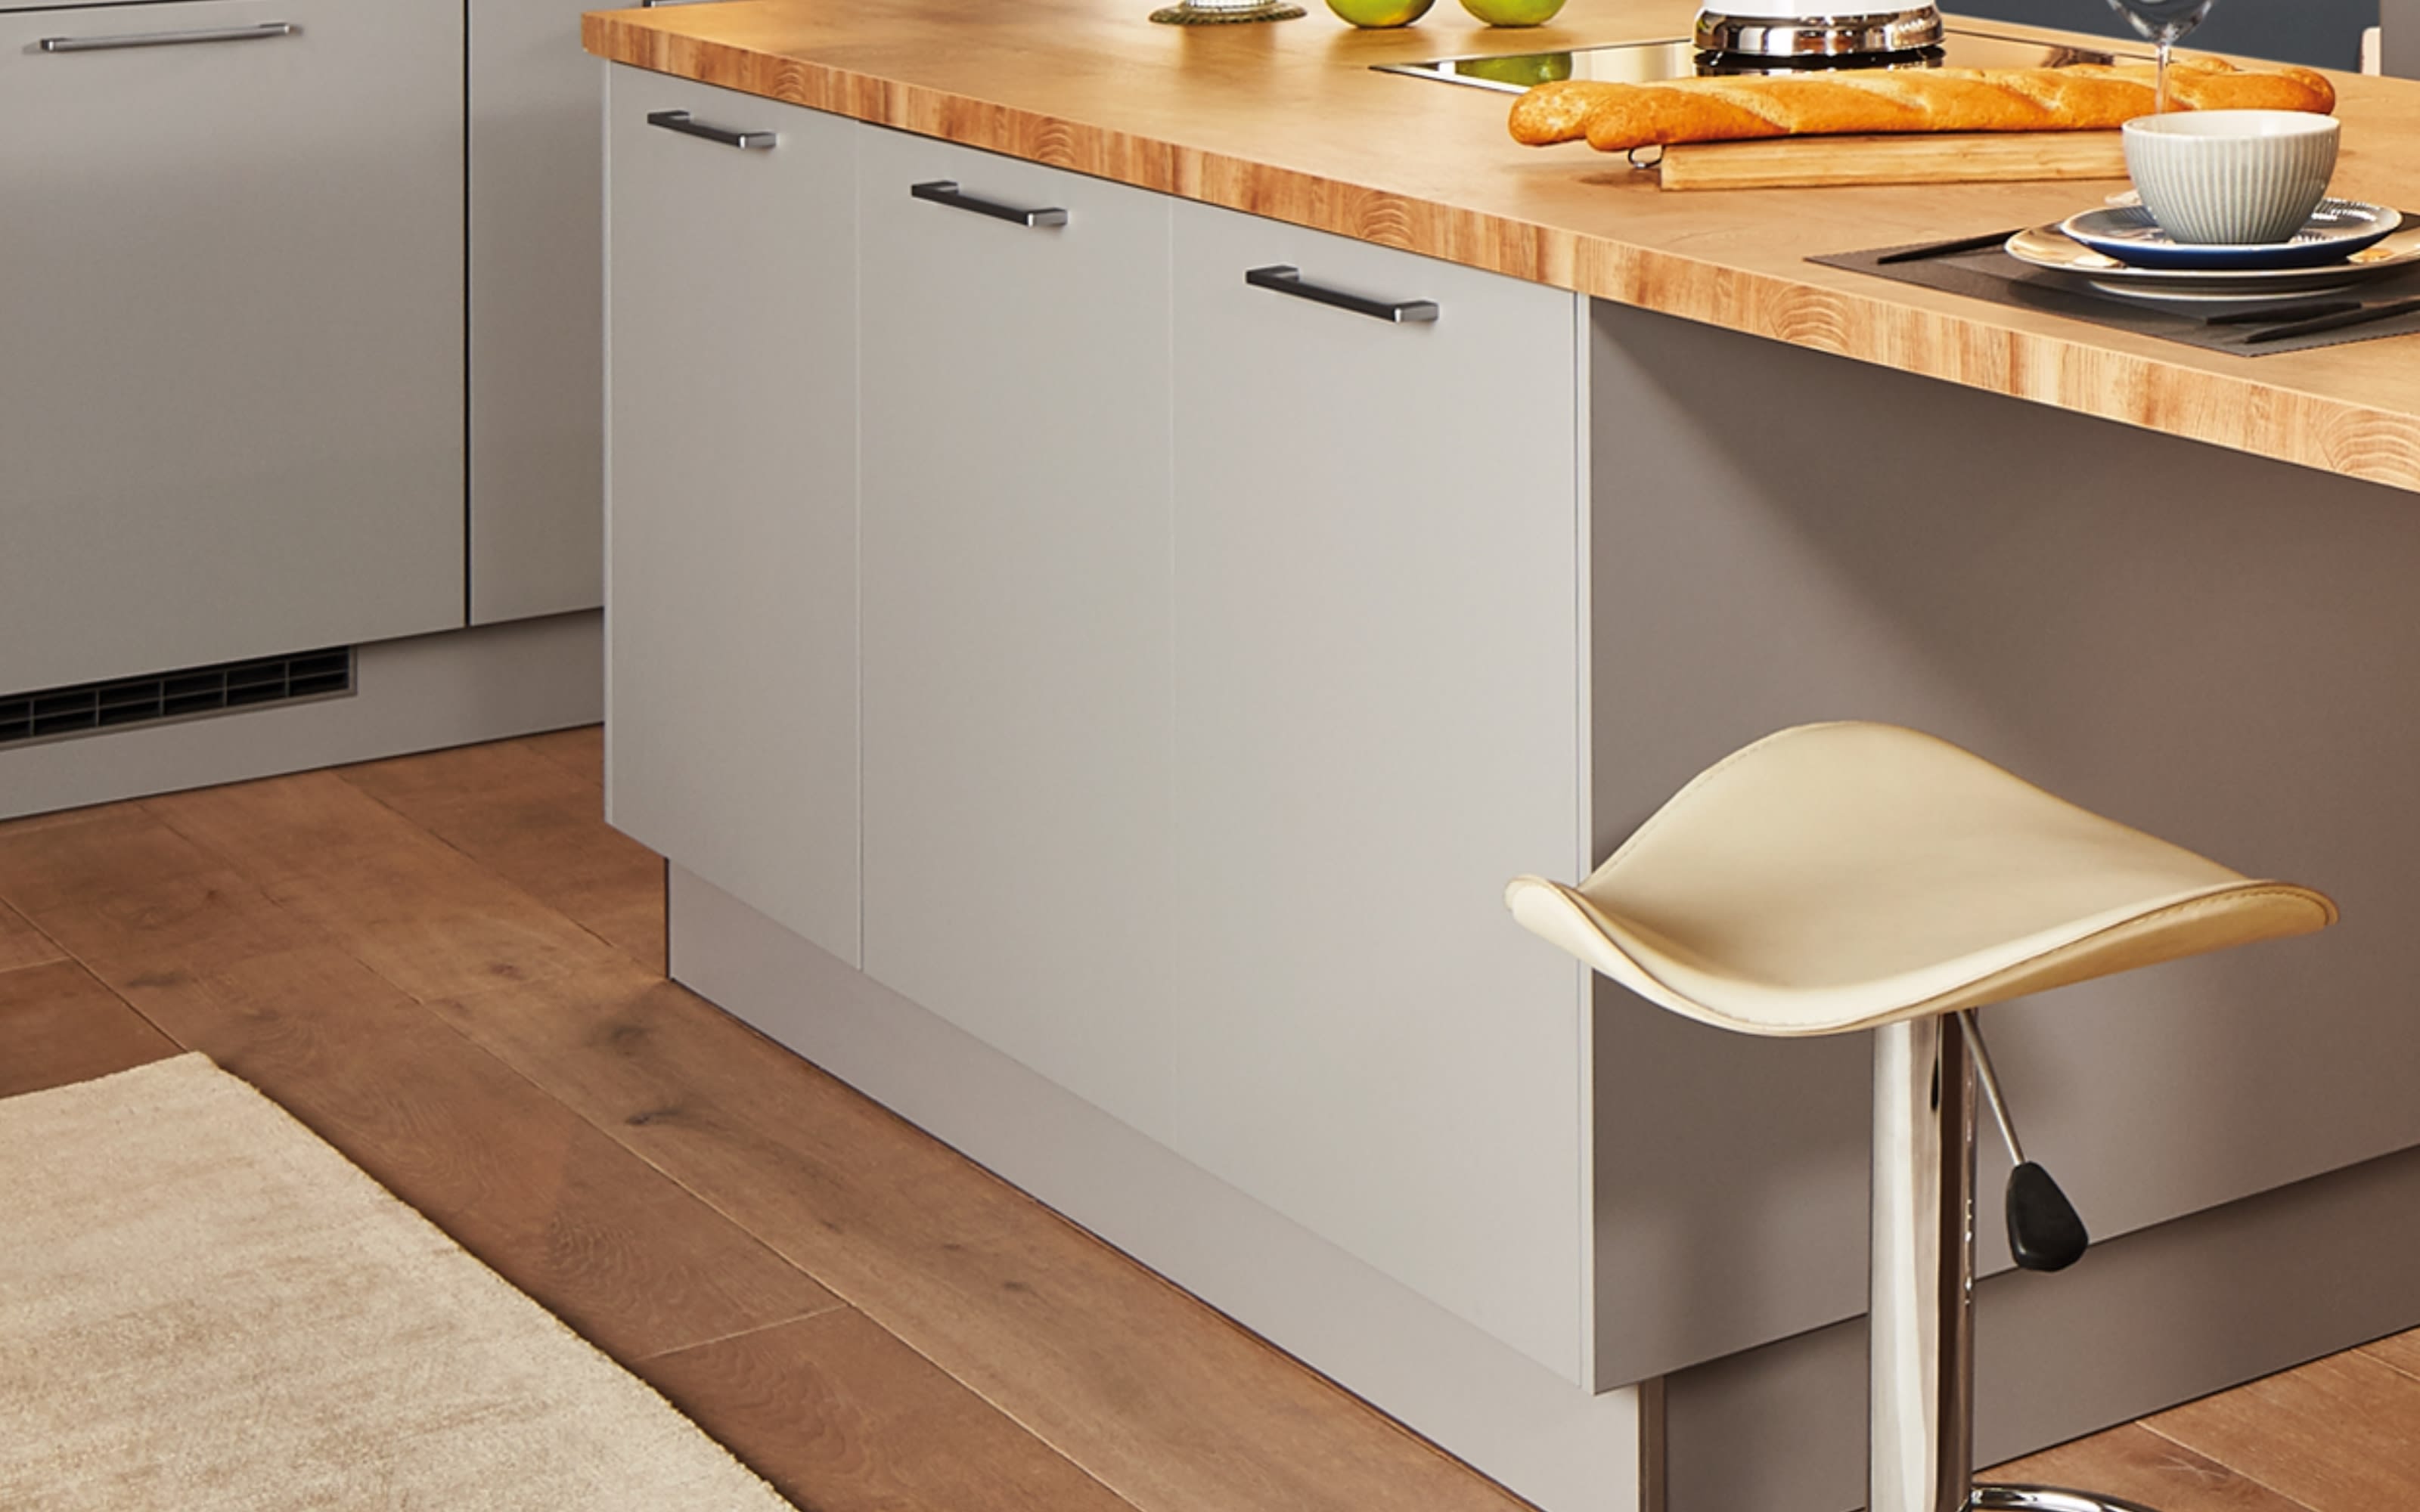 Einbauküche Perfect Soft, perlgrau, inkl. Siemens Elektrogeräte